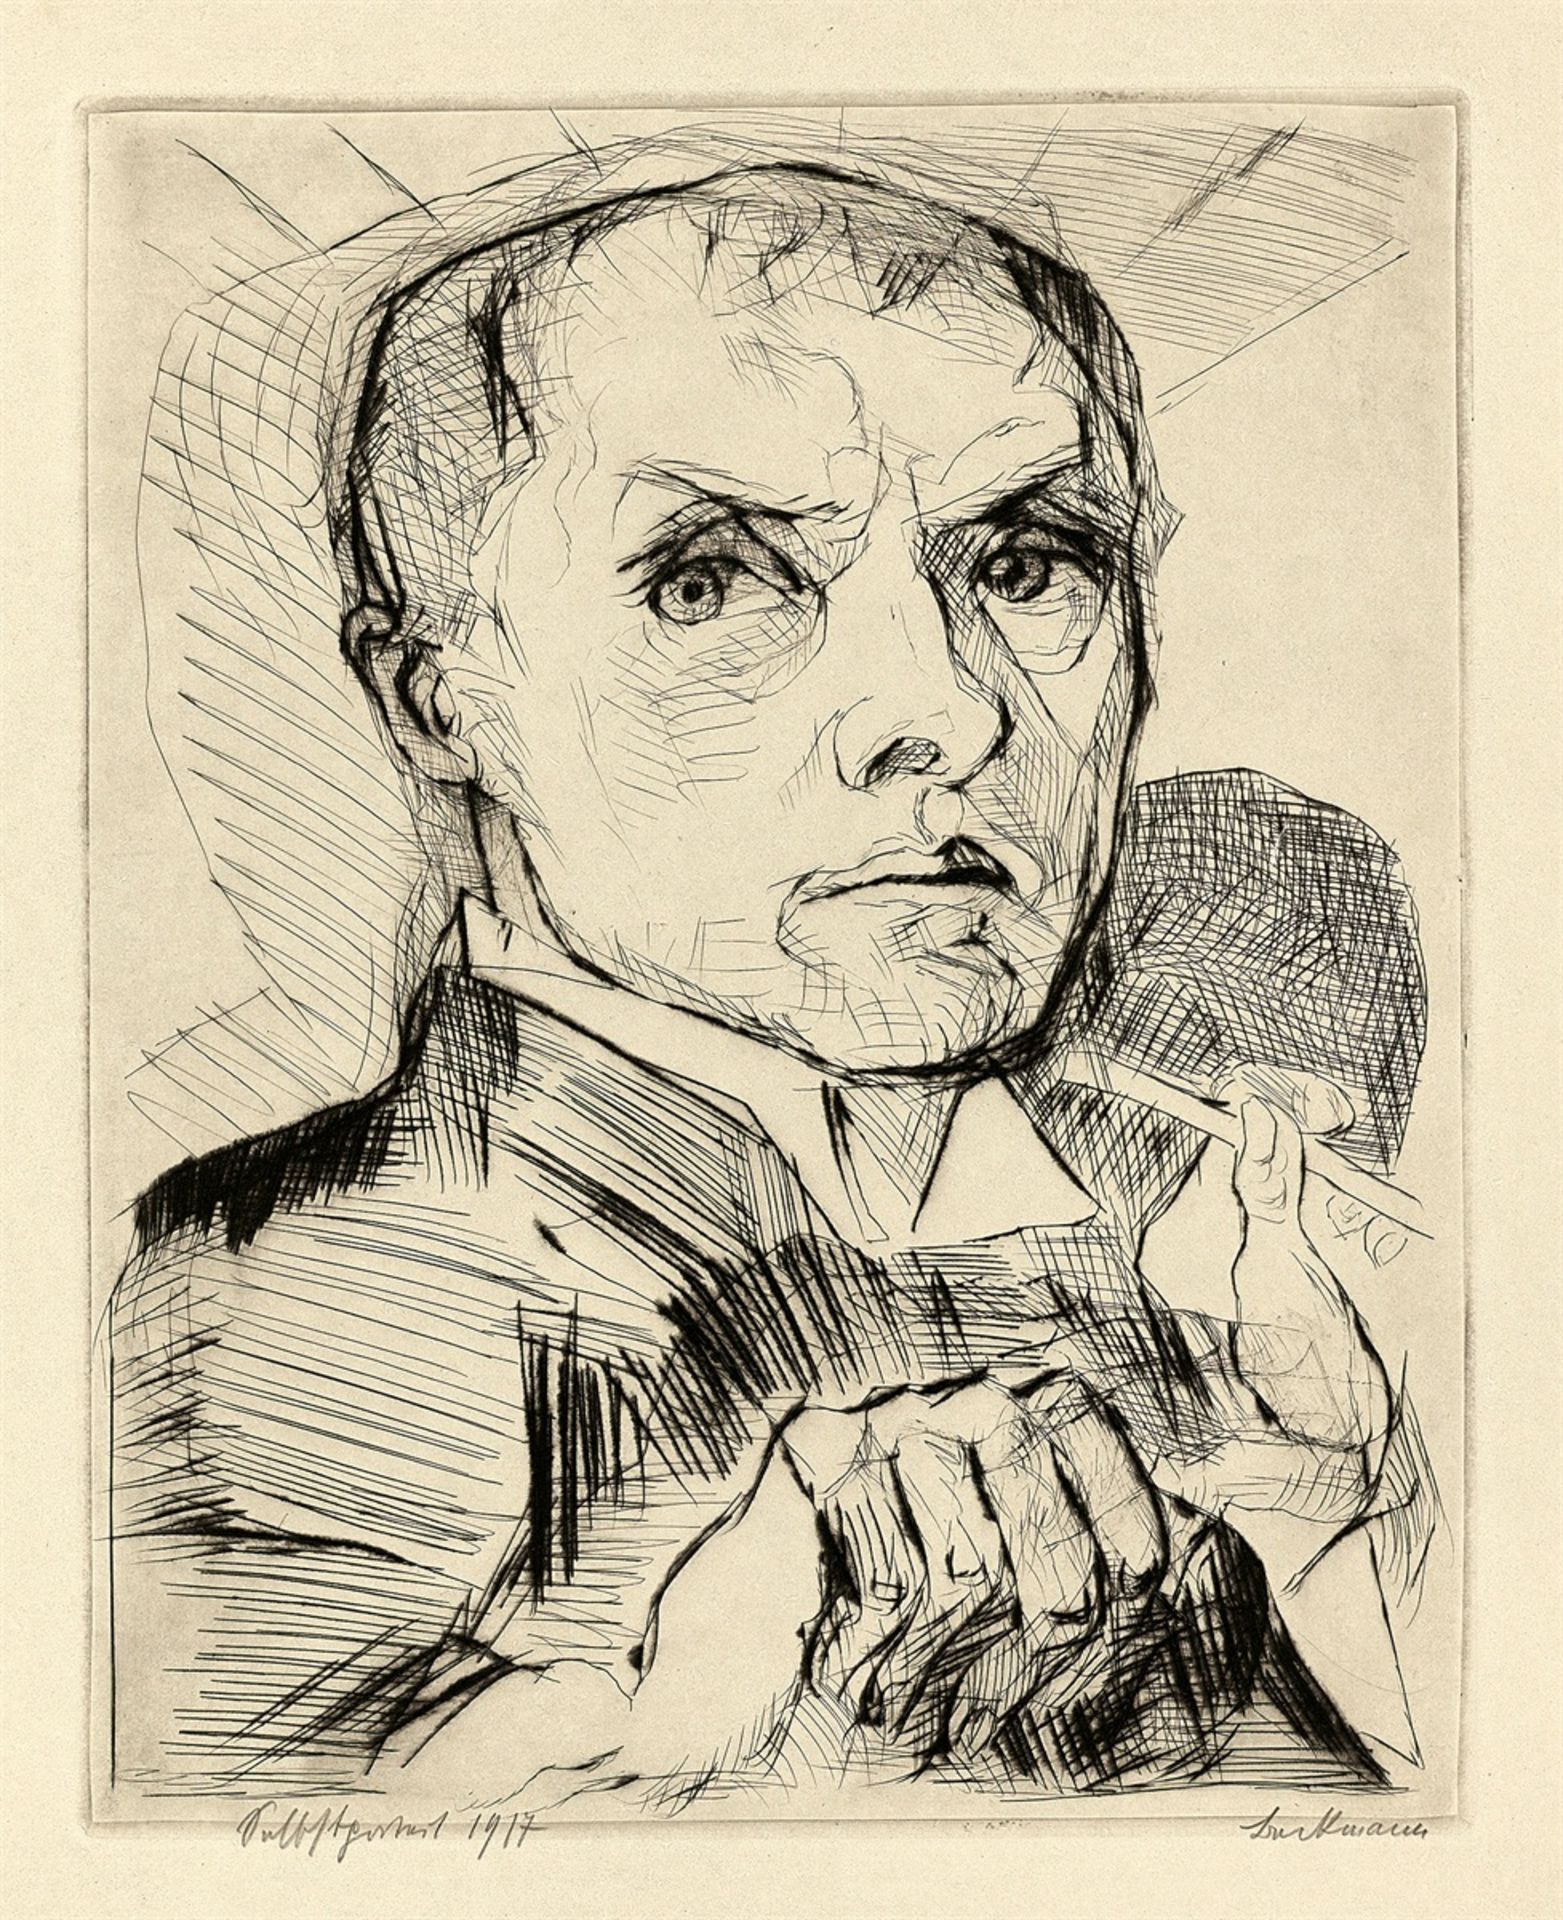 Max Beckmann. ”Gesichter”. 1914-19